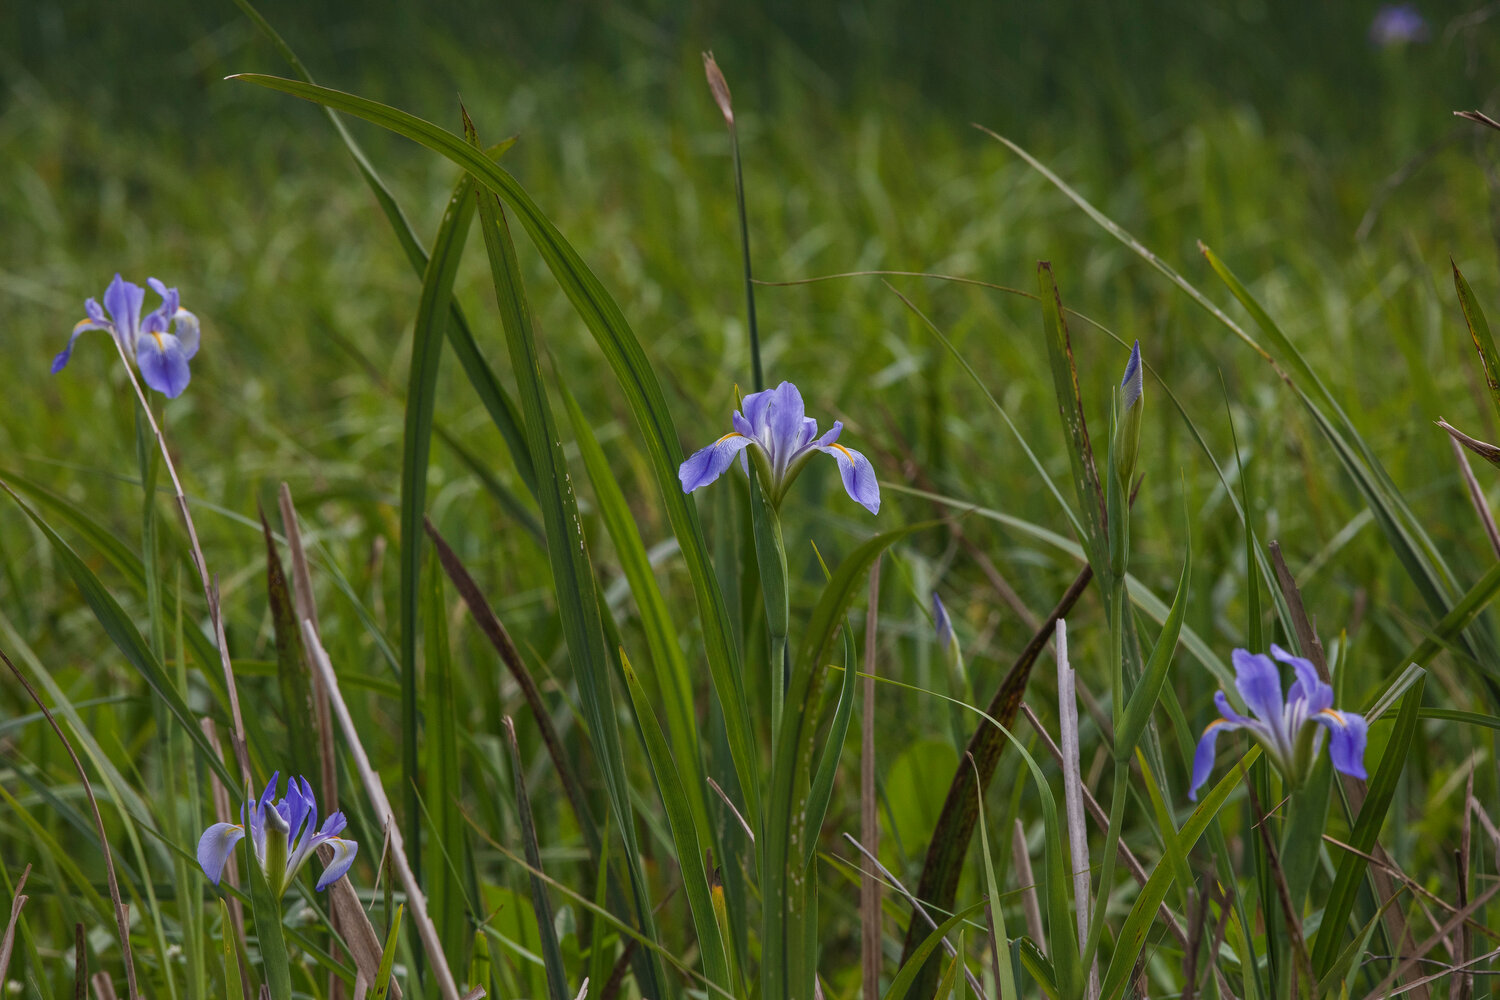 MICAH GREEN / GULF COAST MEDIA

Giant blue iris line the grassy banks of a small creek.